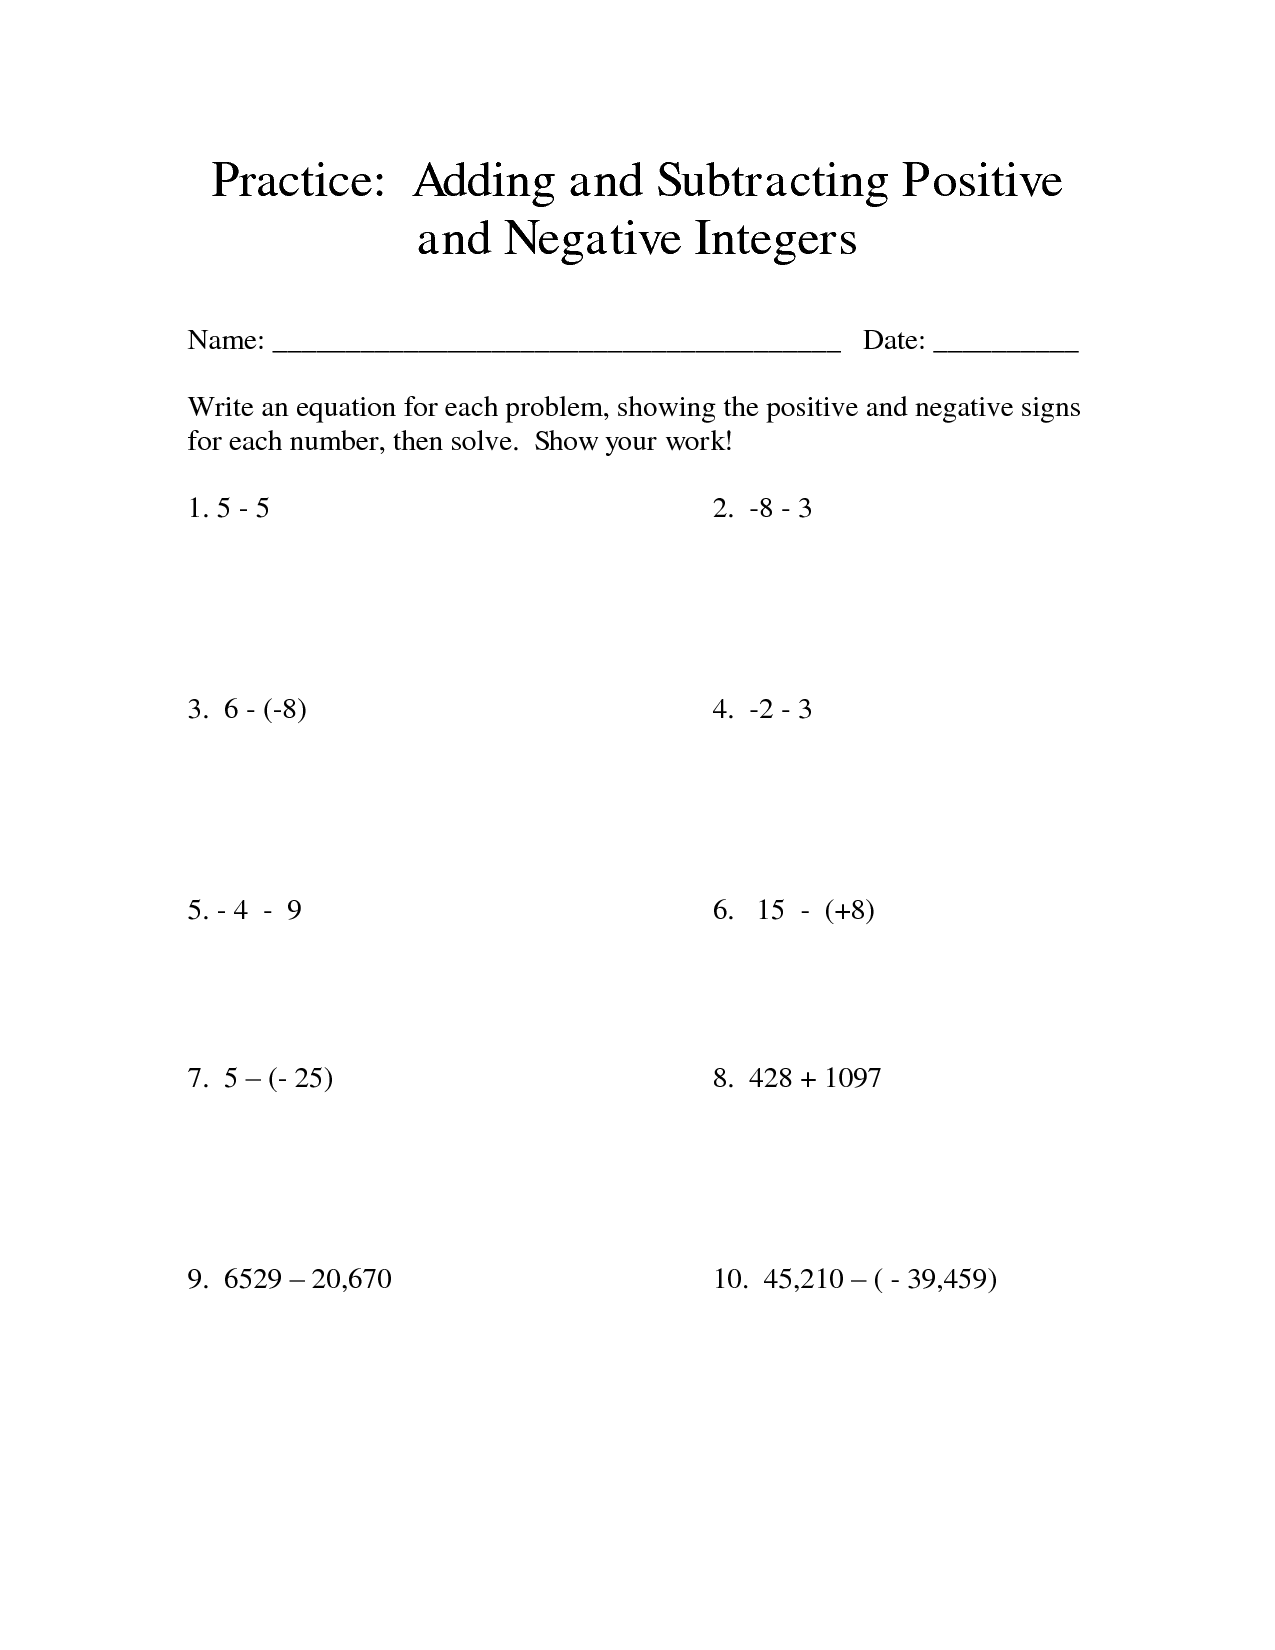 Adding Positive and Negative Integers Worksheets Image